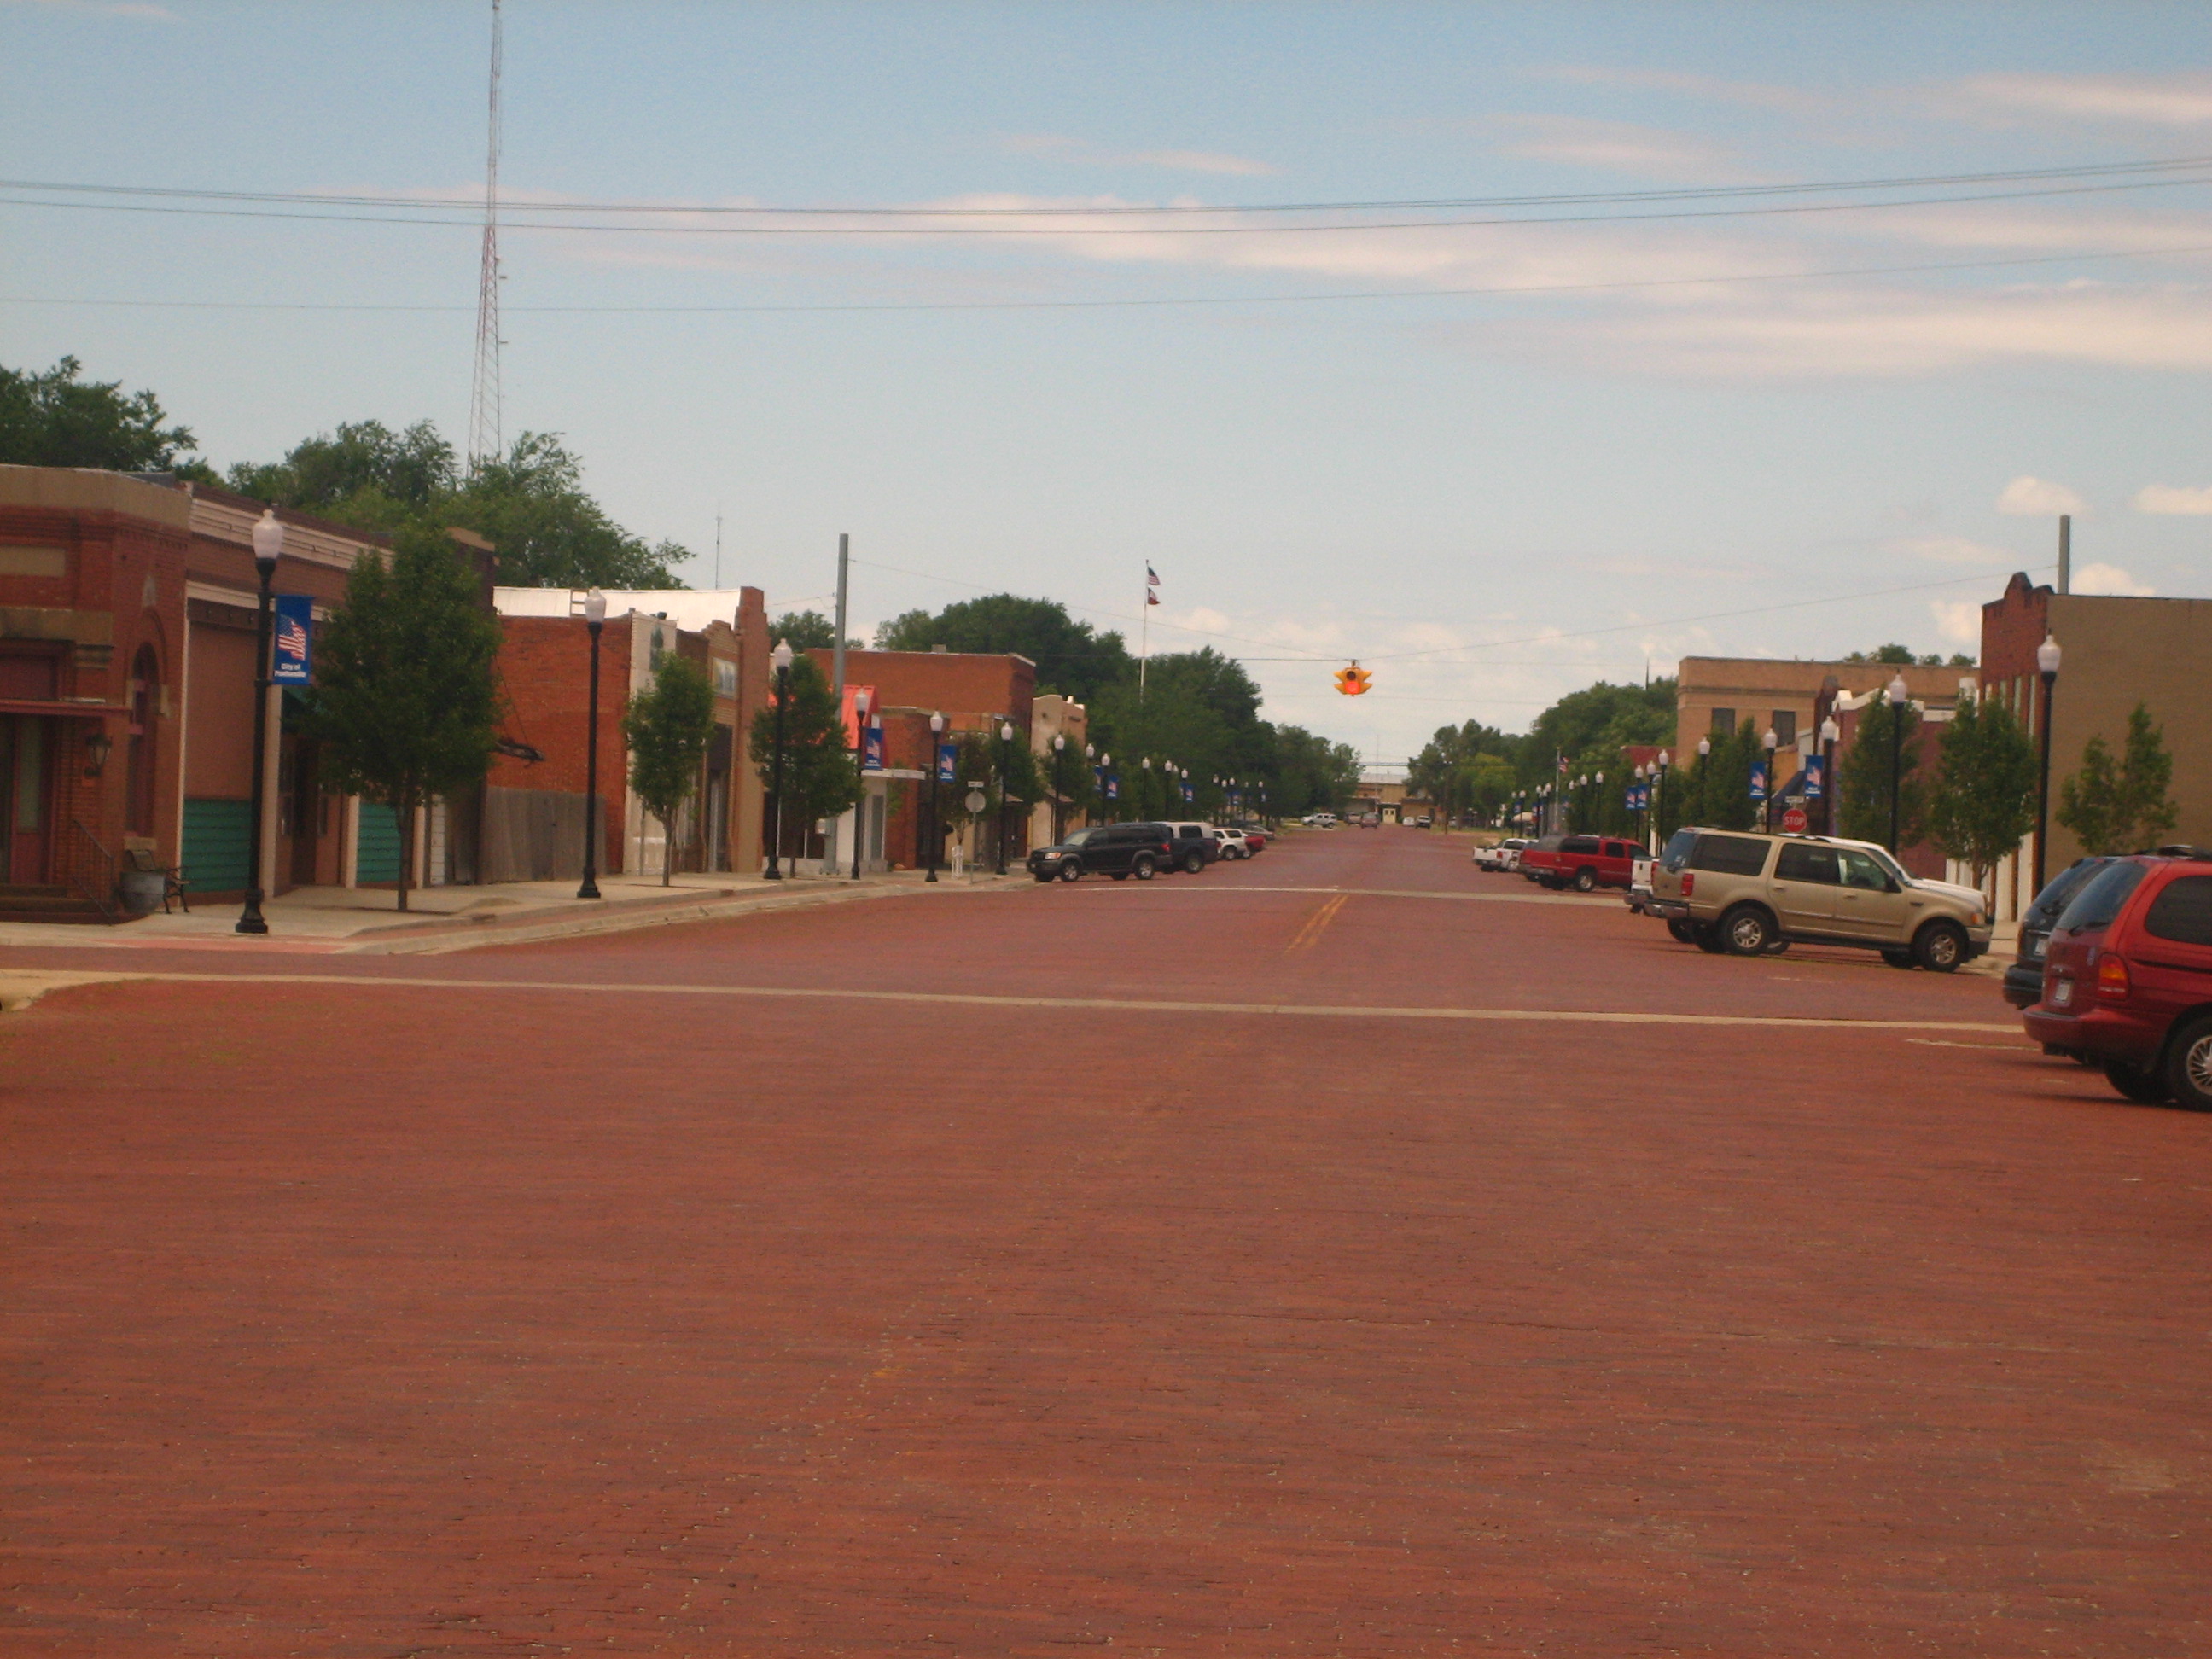 File:Panhandle, Texas, downtown IMG 0645.JPG - Wikimedia Commons